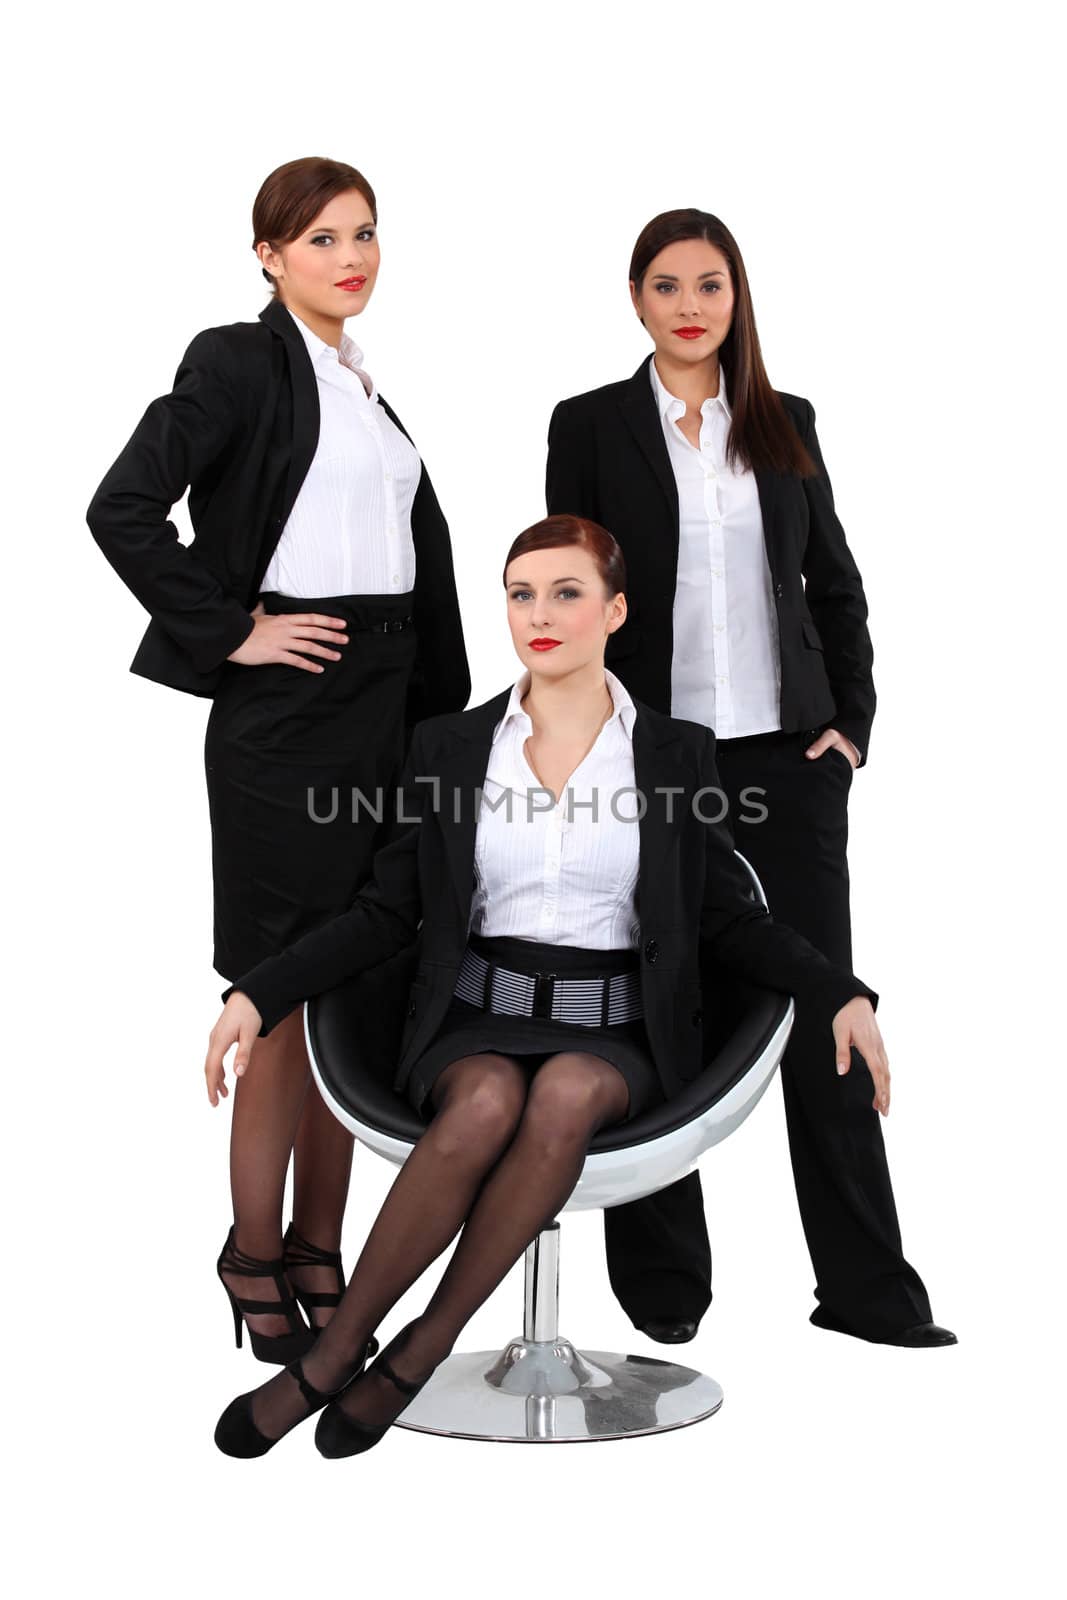 Businesswomen posing together